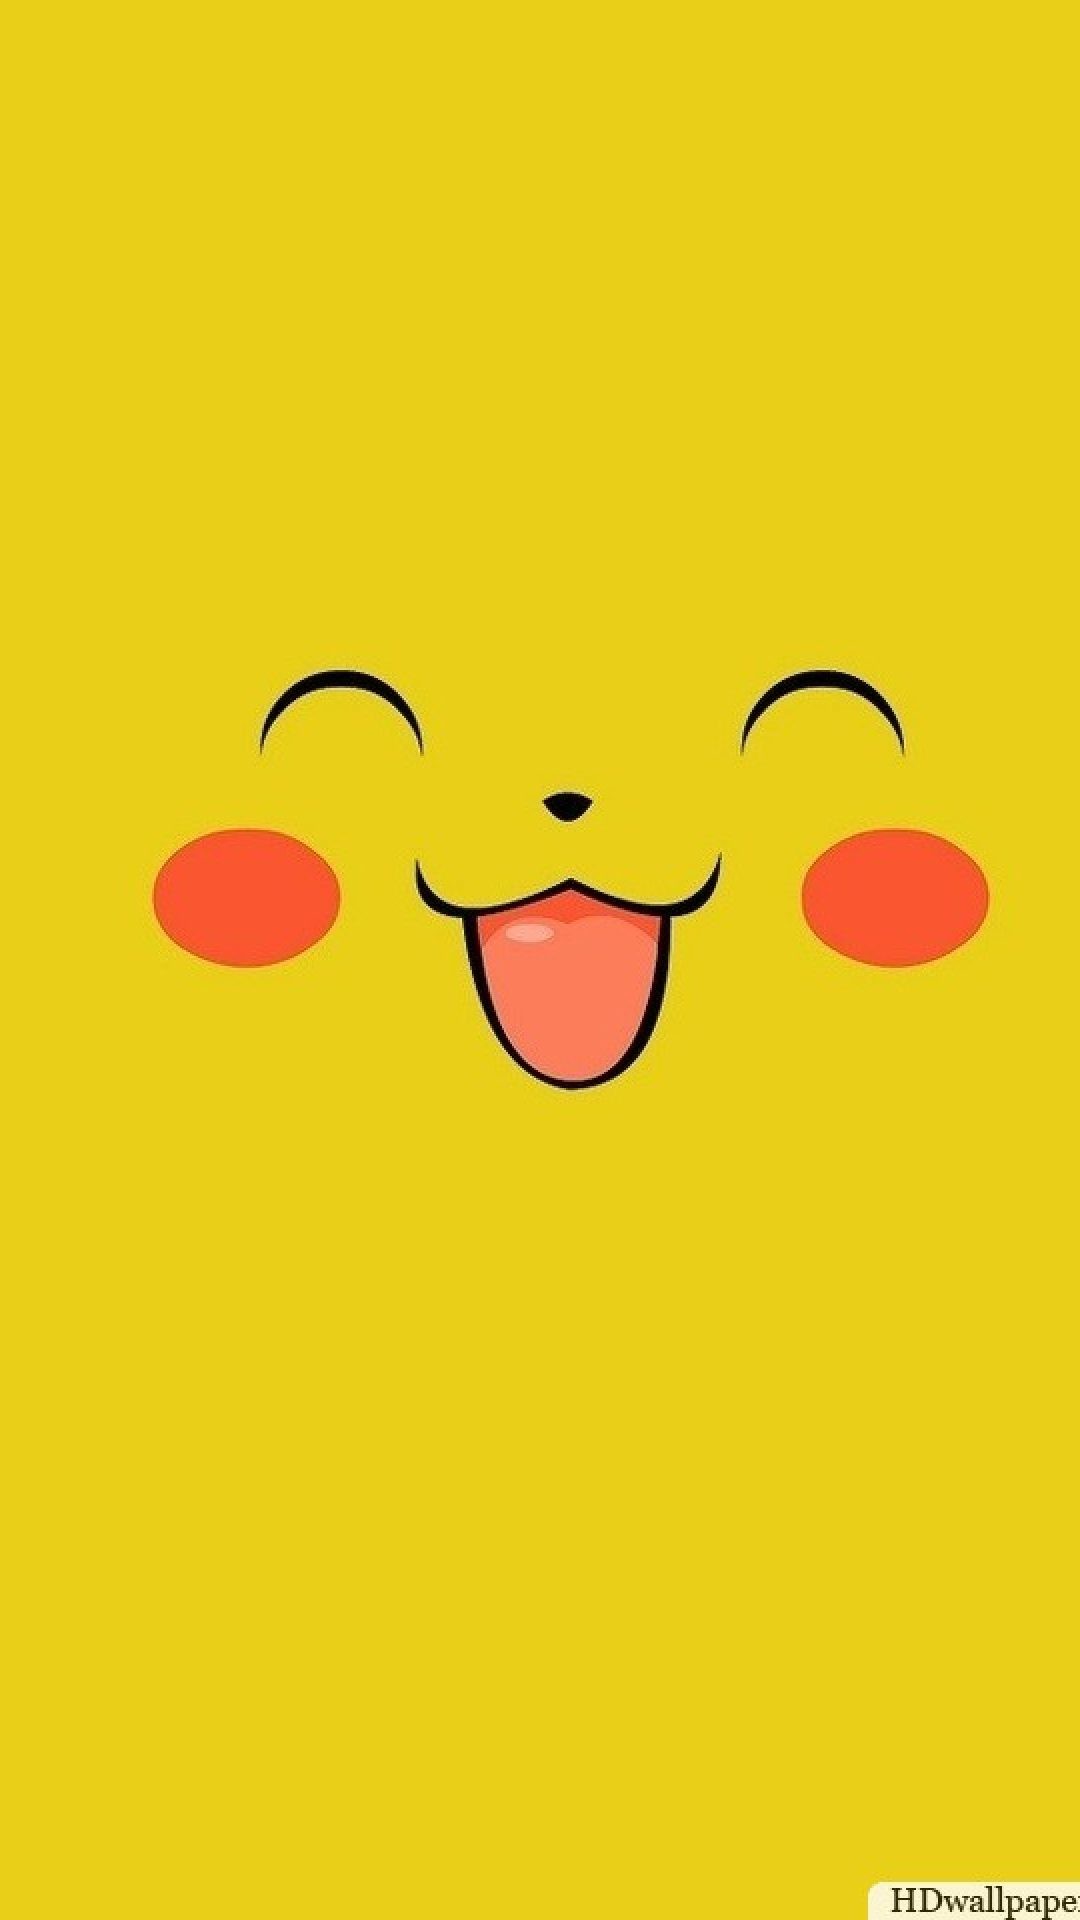 Pikachu wallpaper phone